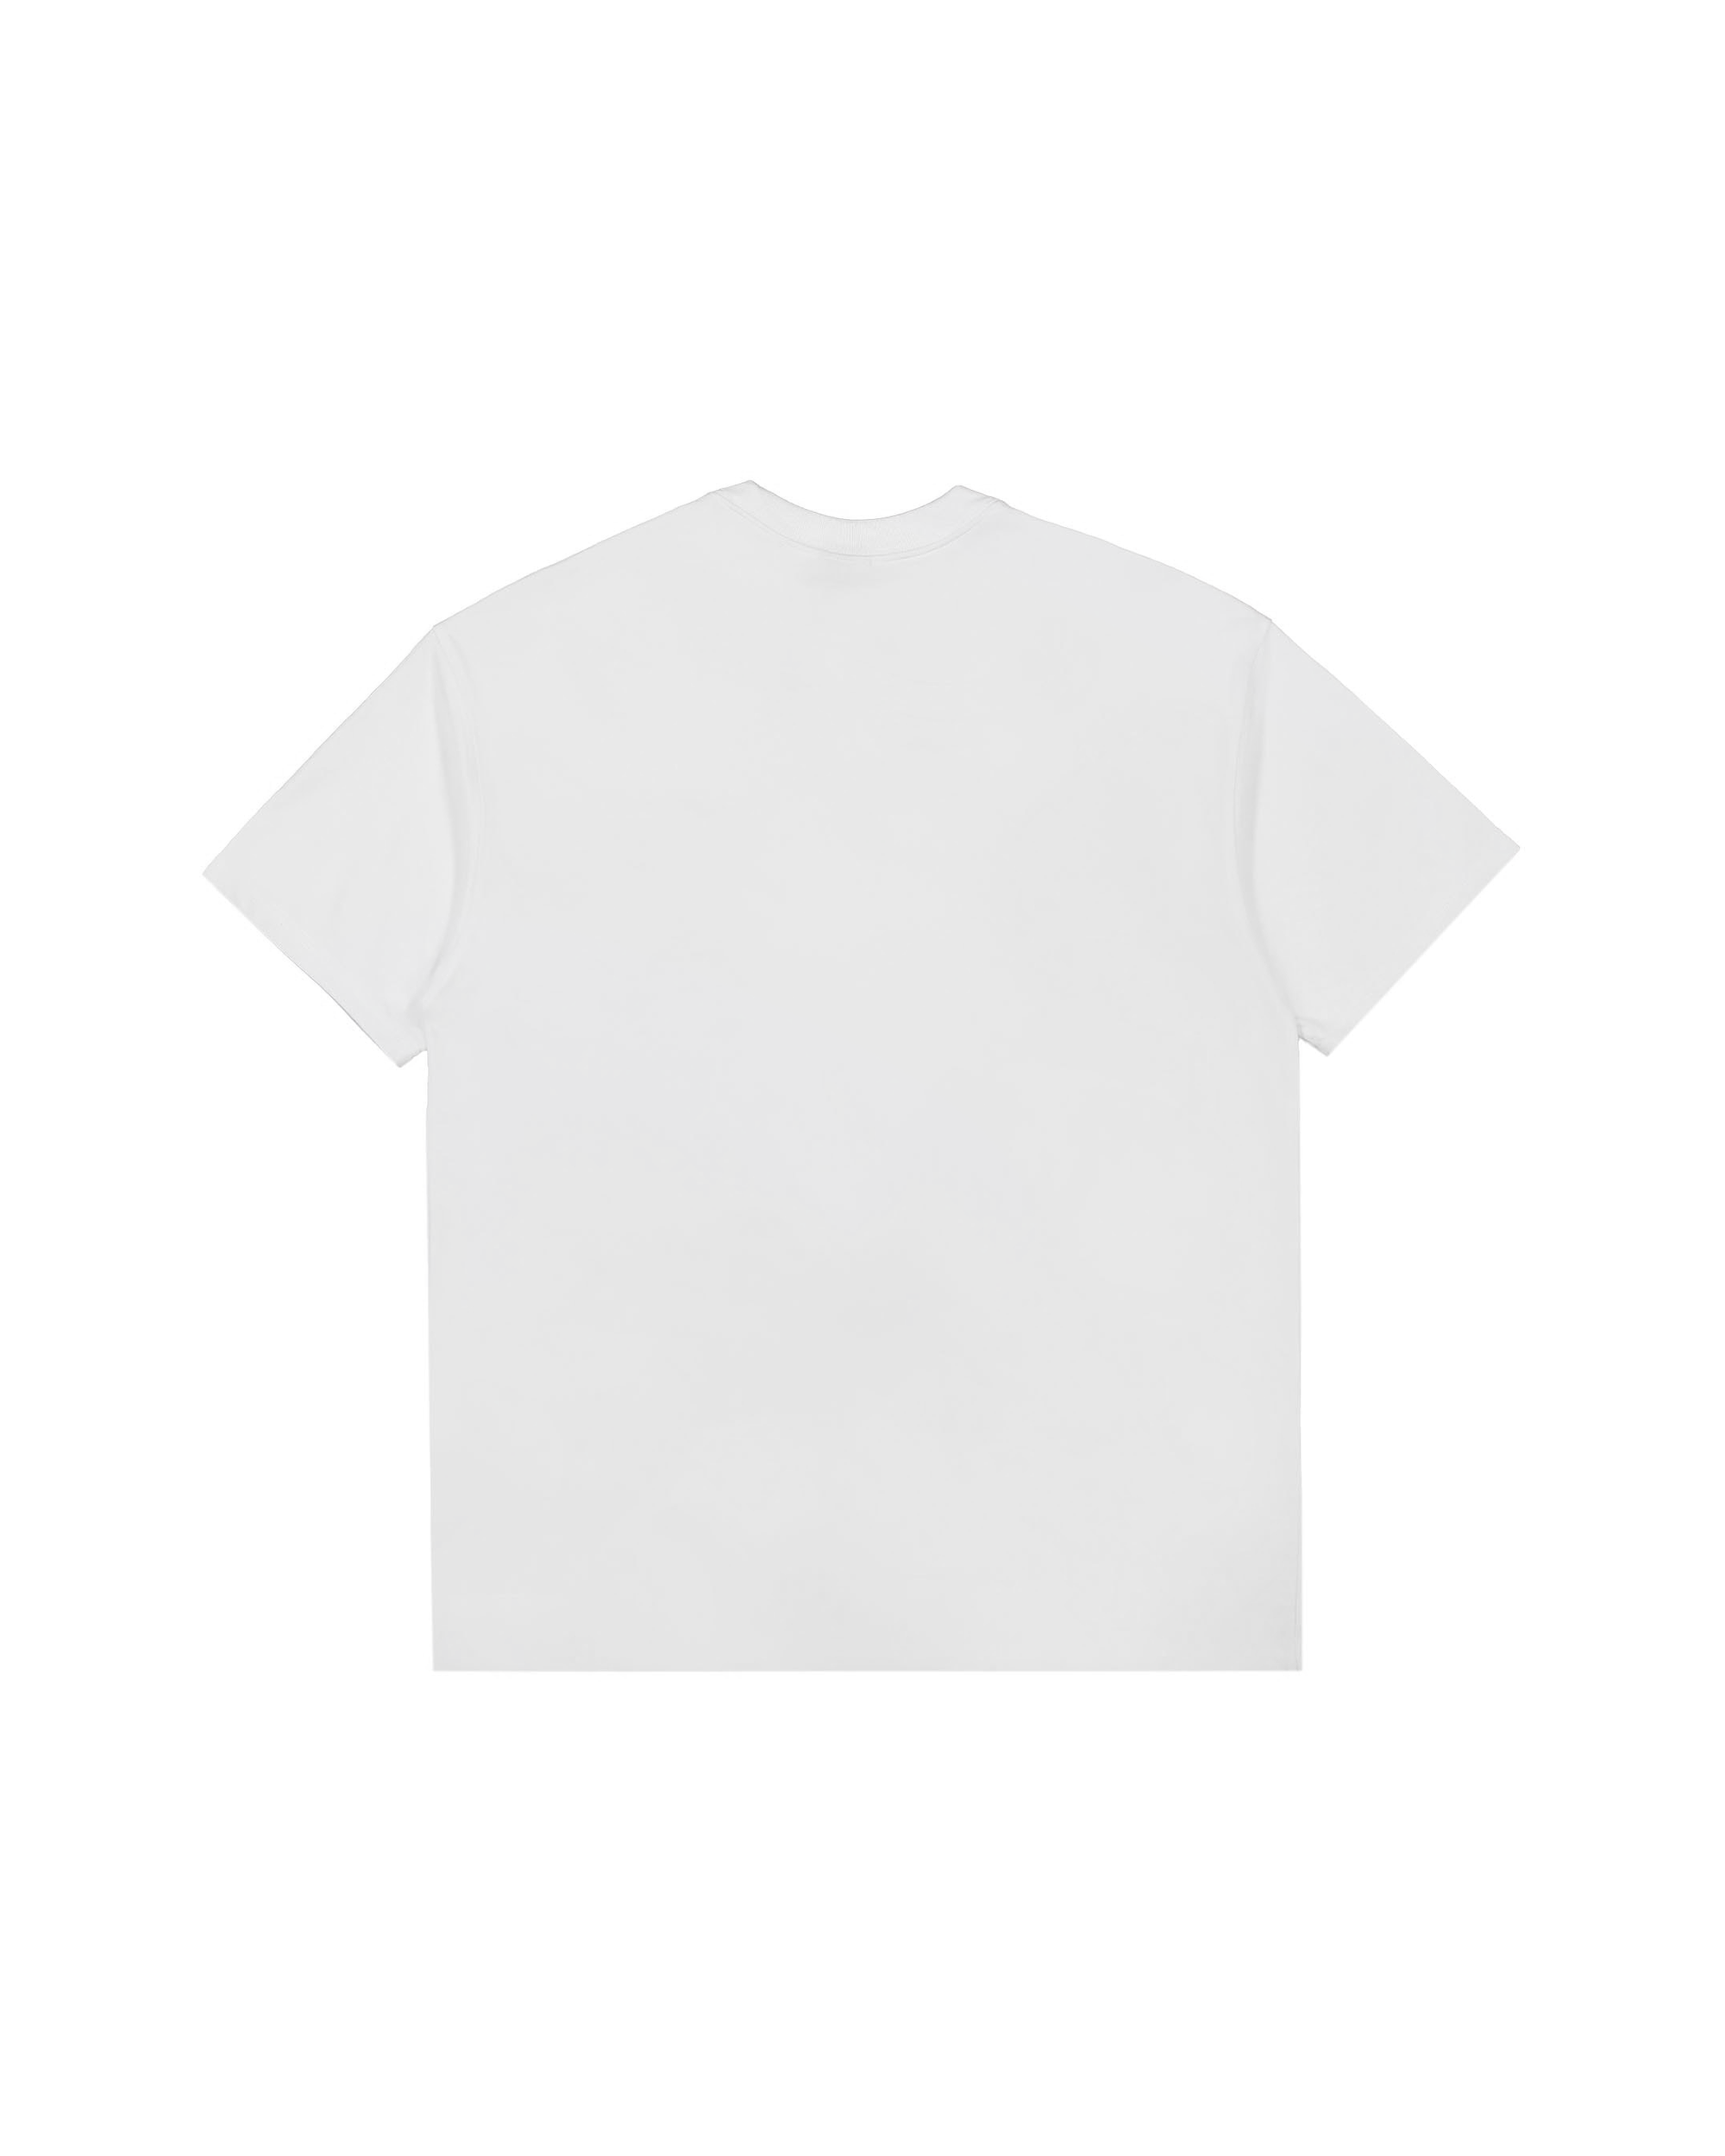 Cruise Boat T-Shirt - Summit White